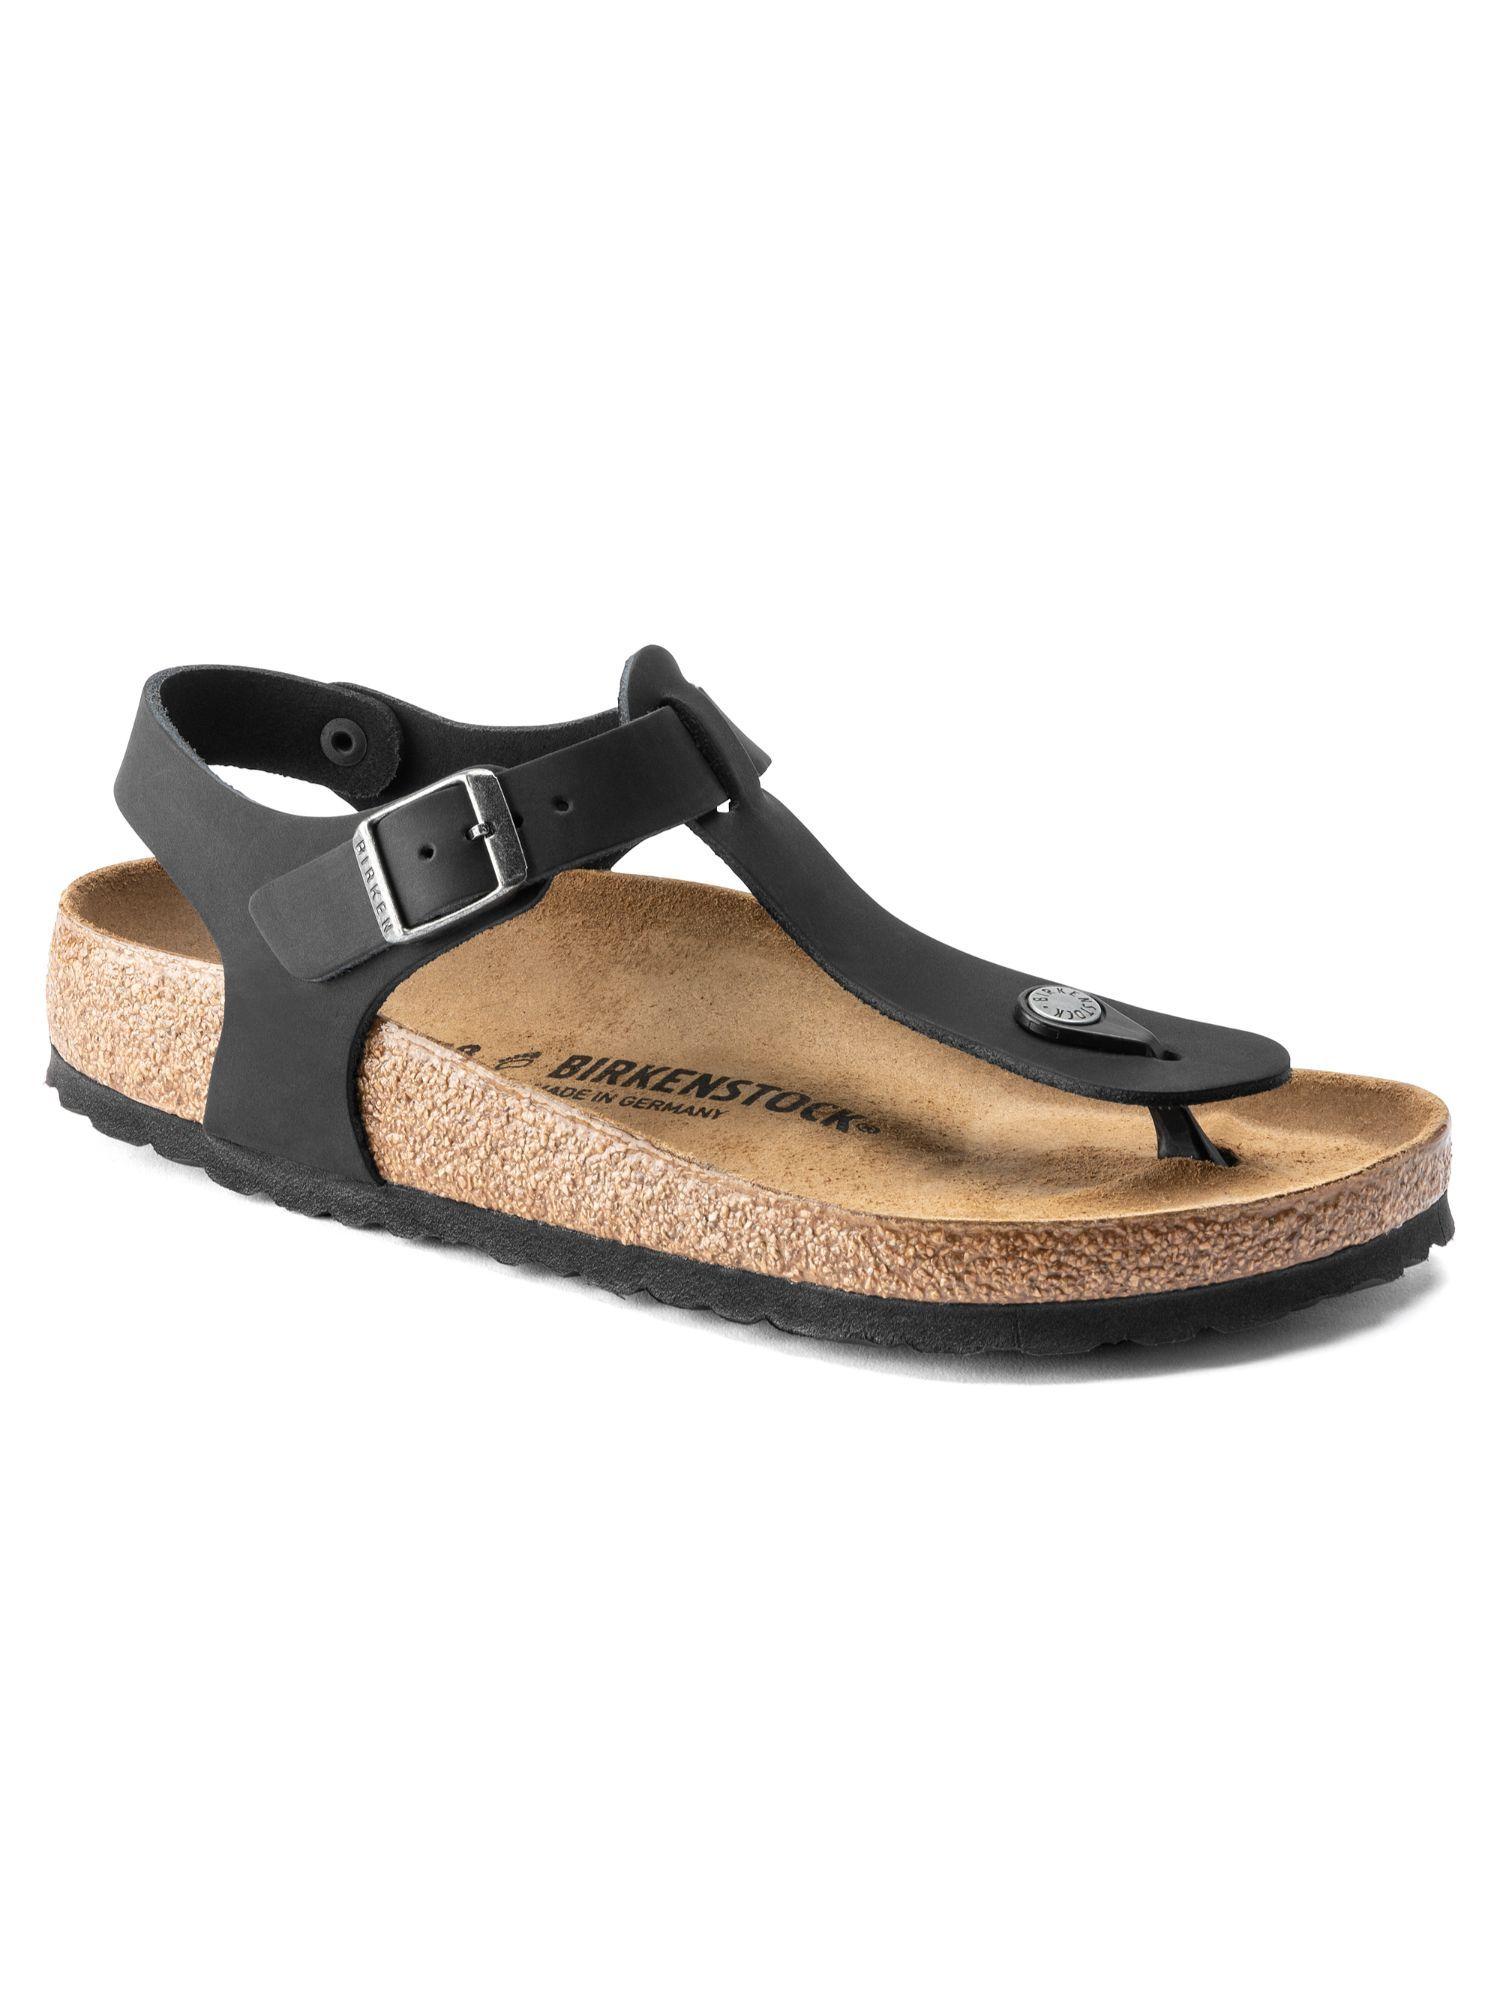 kairo-black-regular-width-unisex-sandals-with-an-ankle-strap